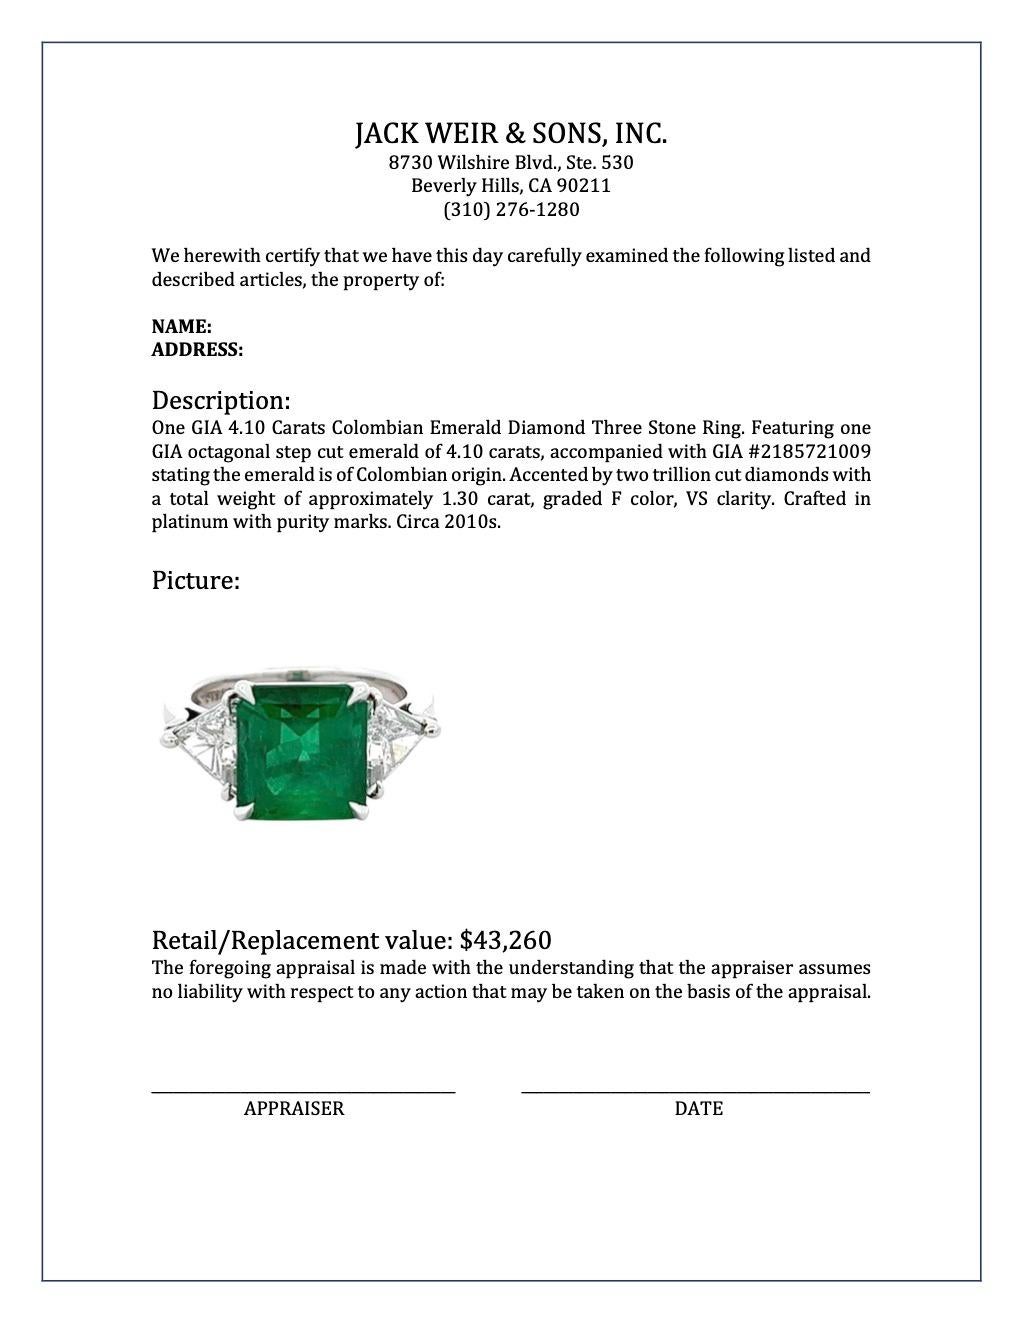 Gia 4.10 Carats Colombian Emerald Diamond Three Stone Ring 3